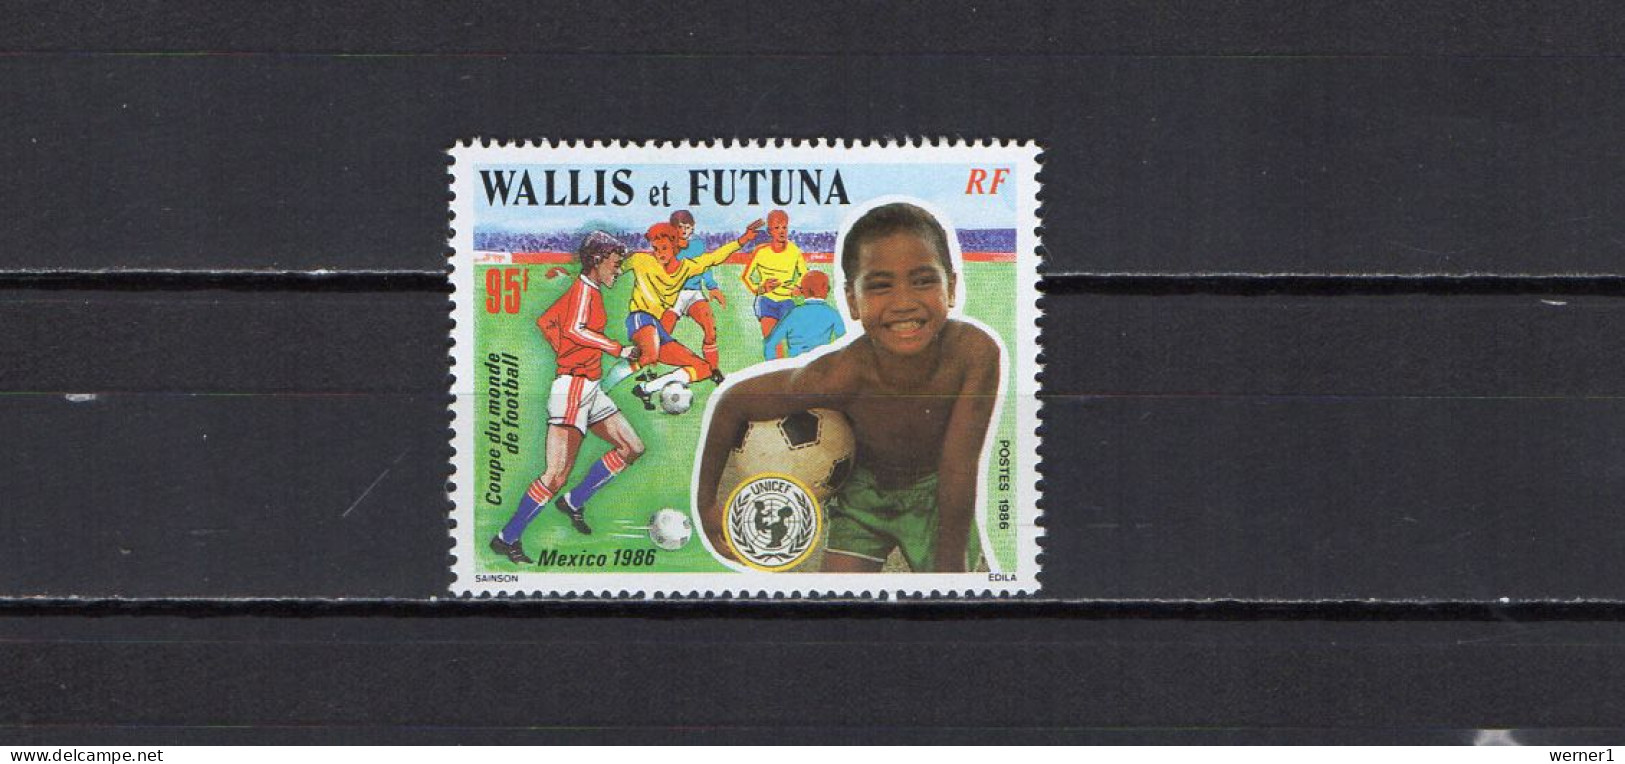 Wallis & Futuna 1986 Football Soccer World Cup Stamp MNH - 1986 – México